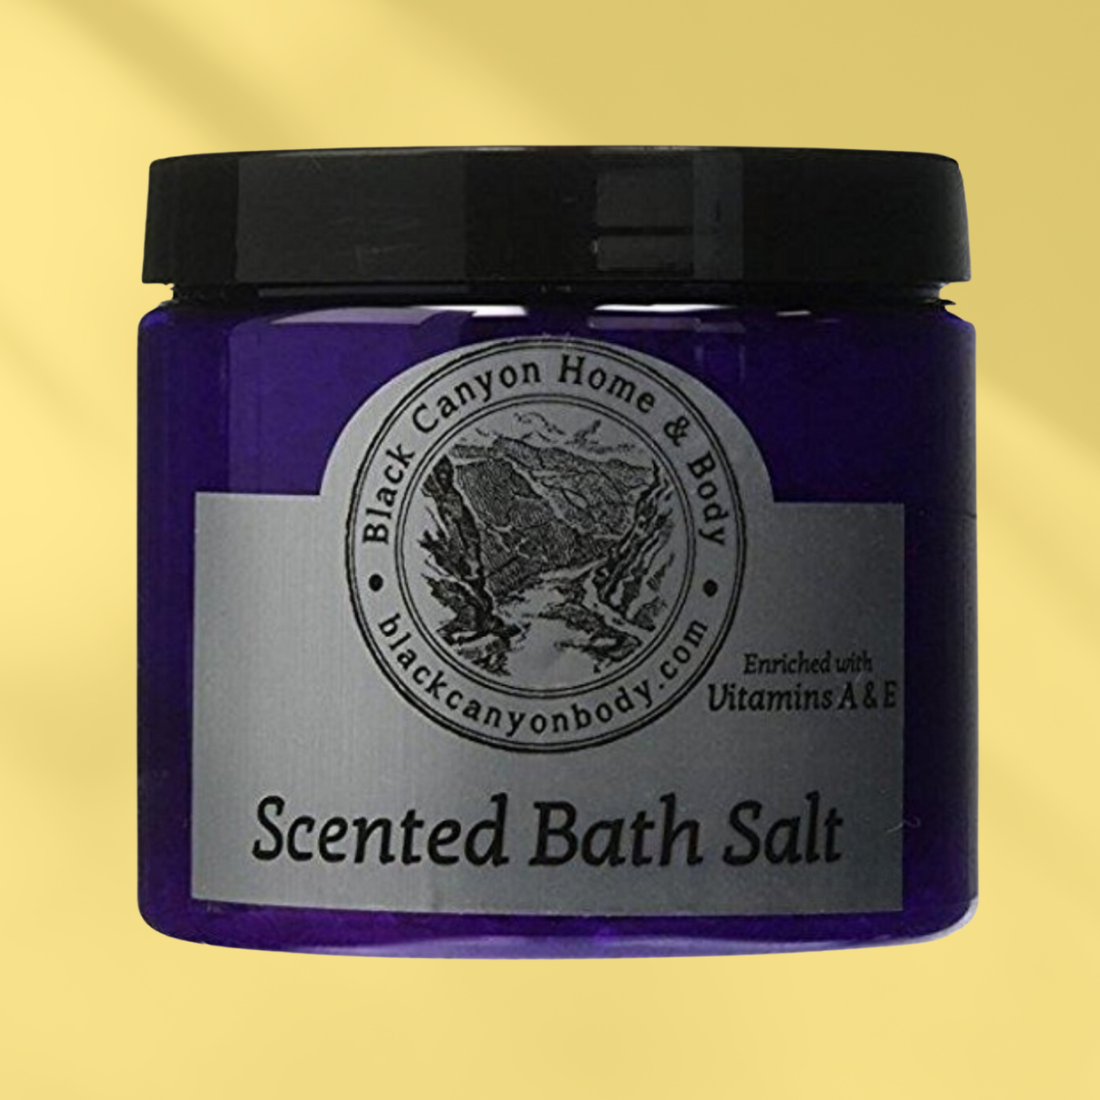 Black Canyon Coconut Lemongrass Scented Sea Salt Bath Soak